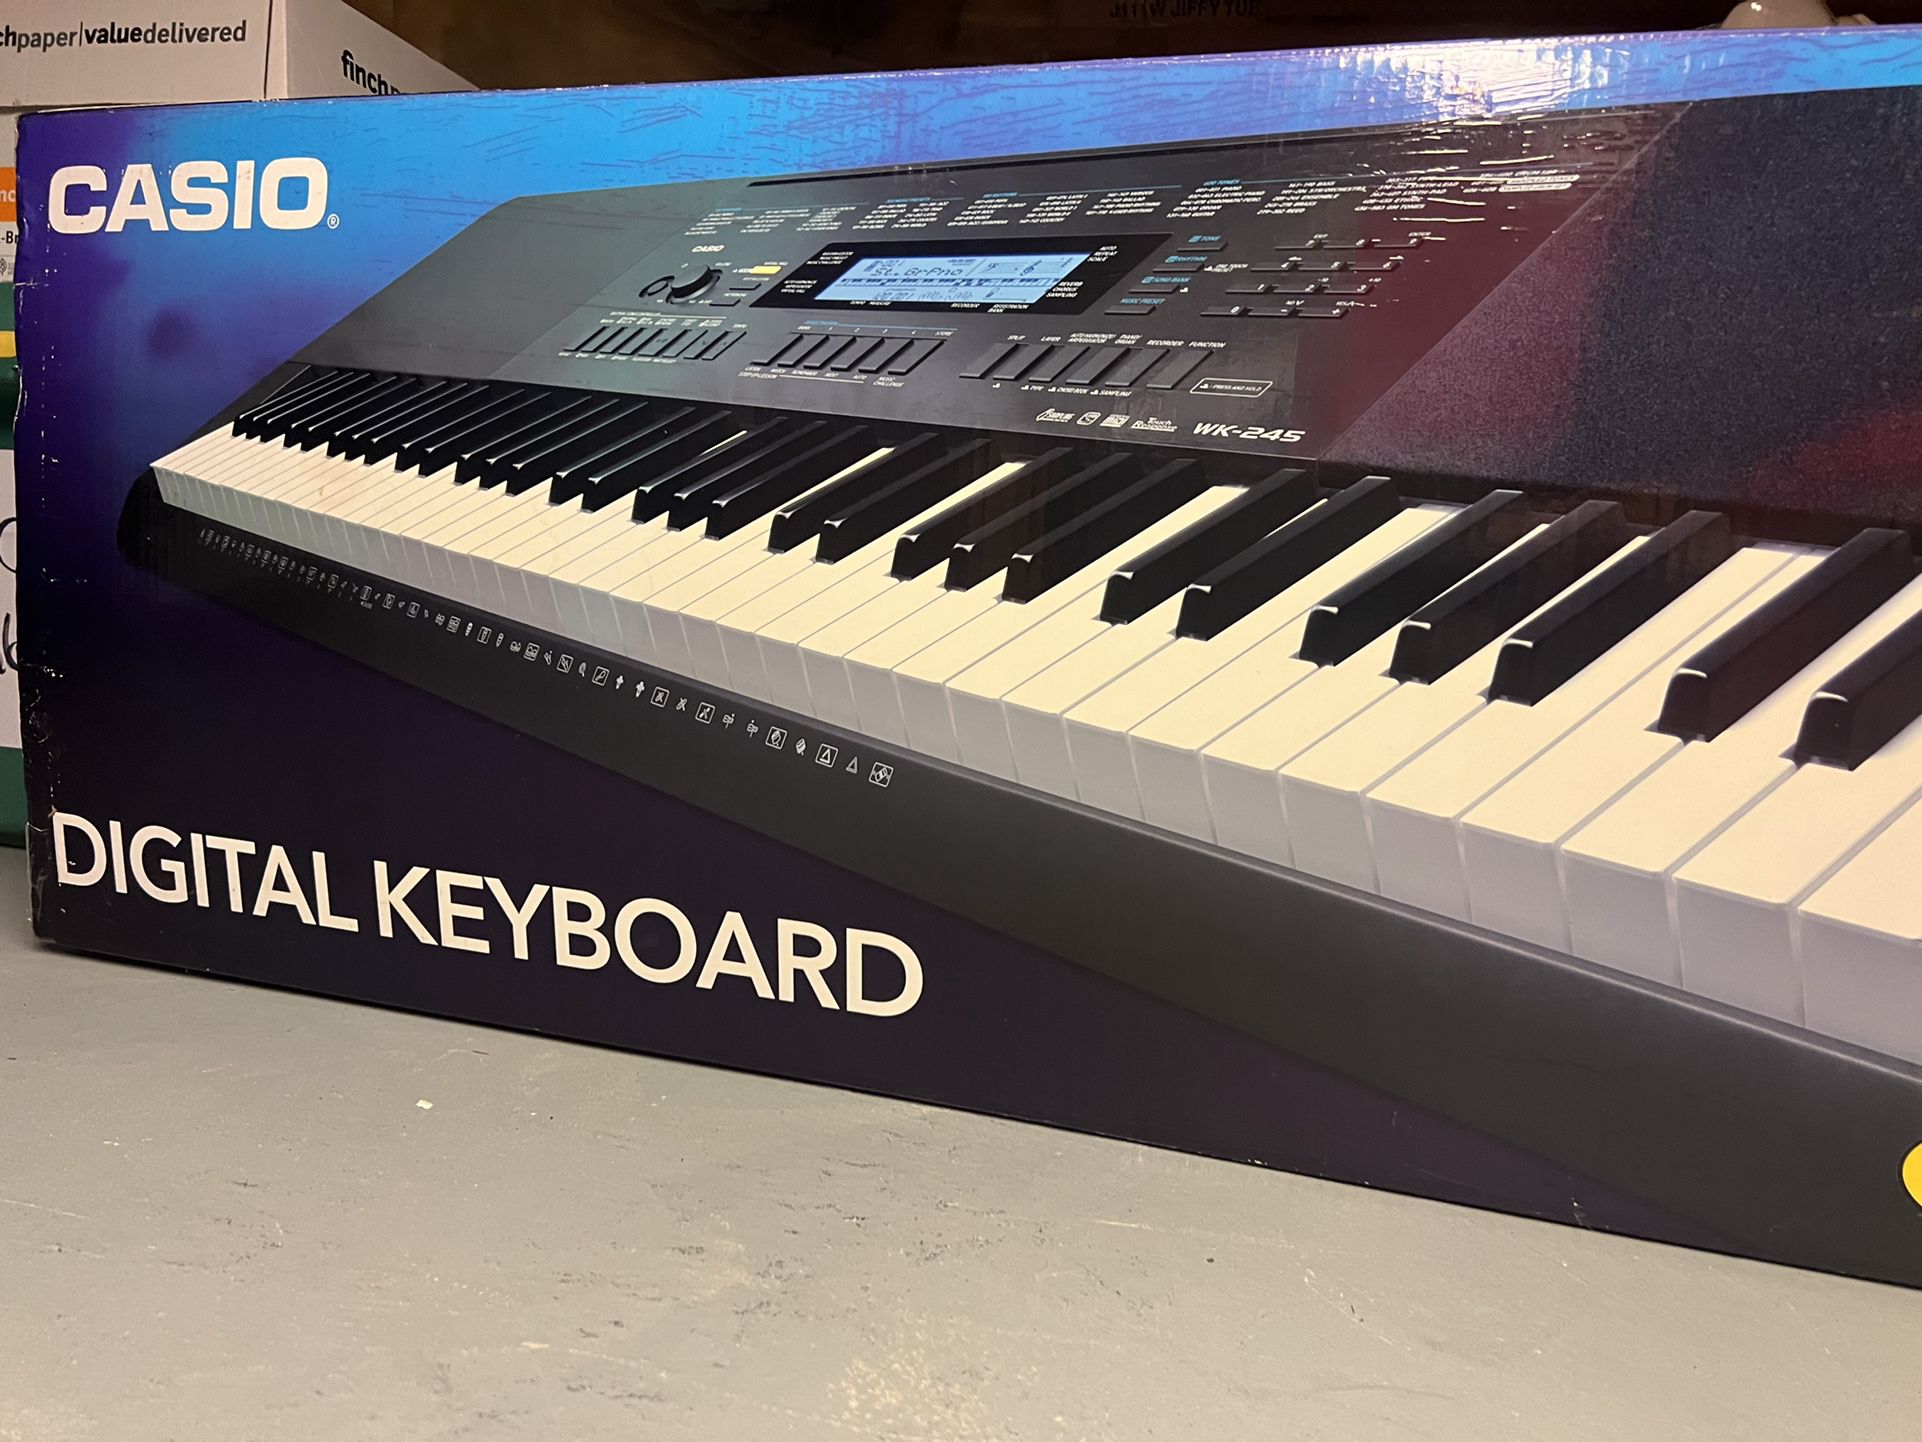 New Casio Keyboard 